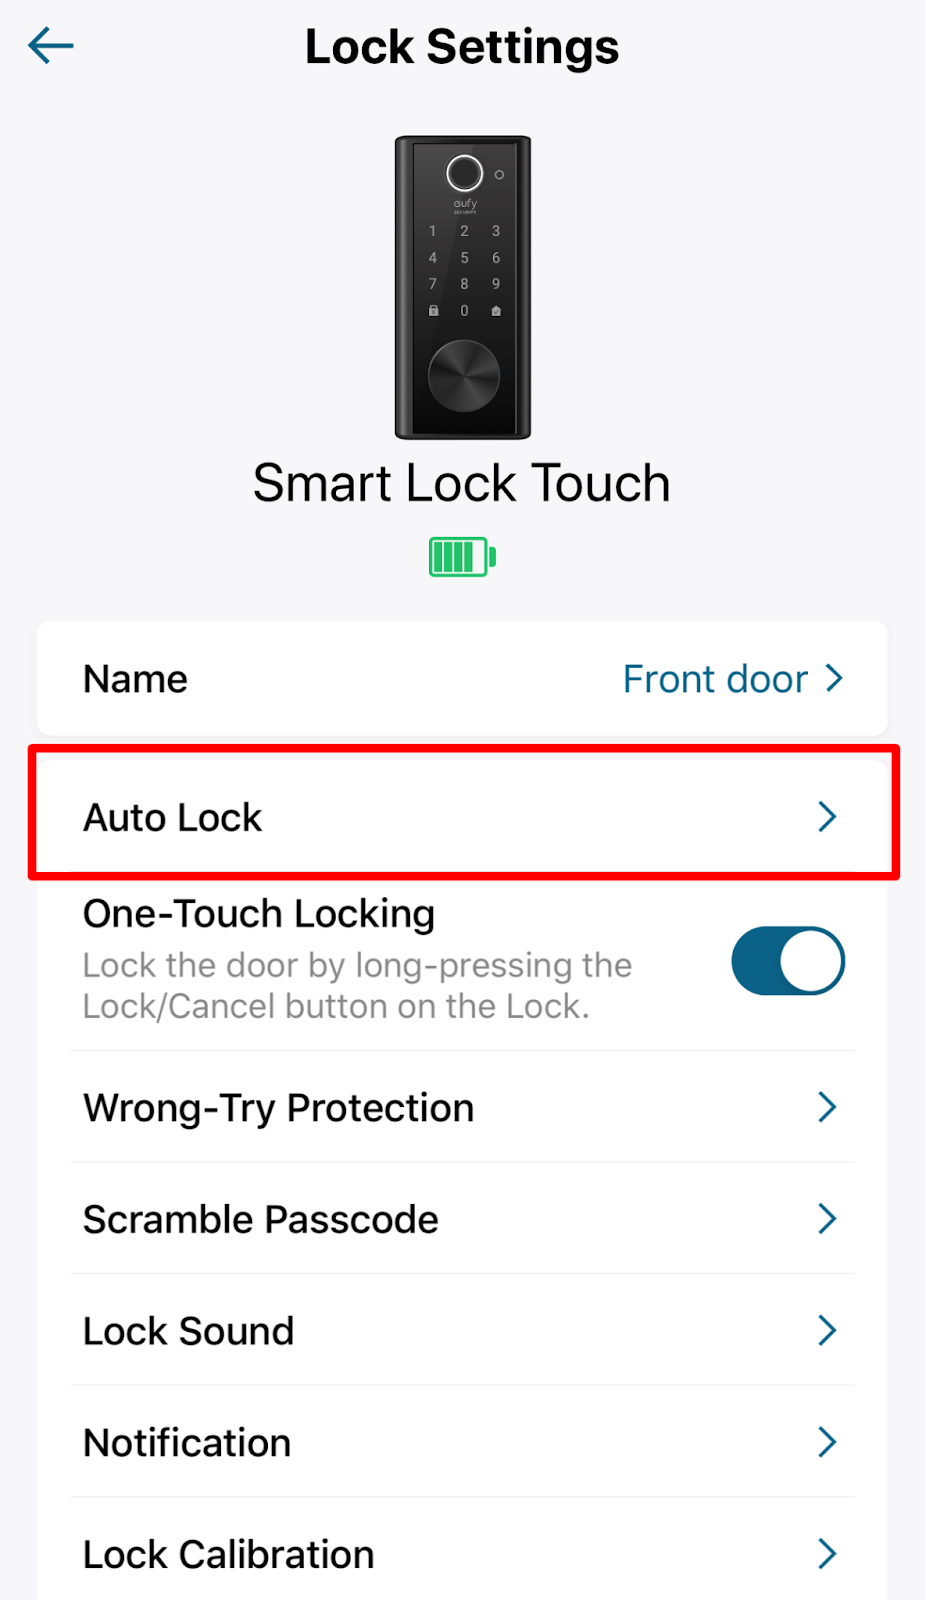 How to Fix Smart Lock not Working